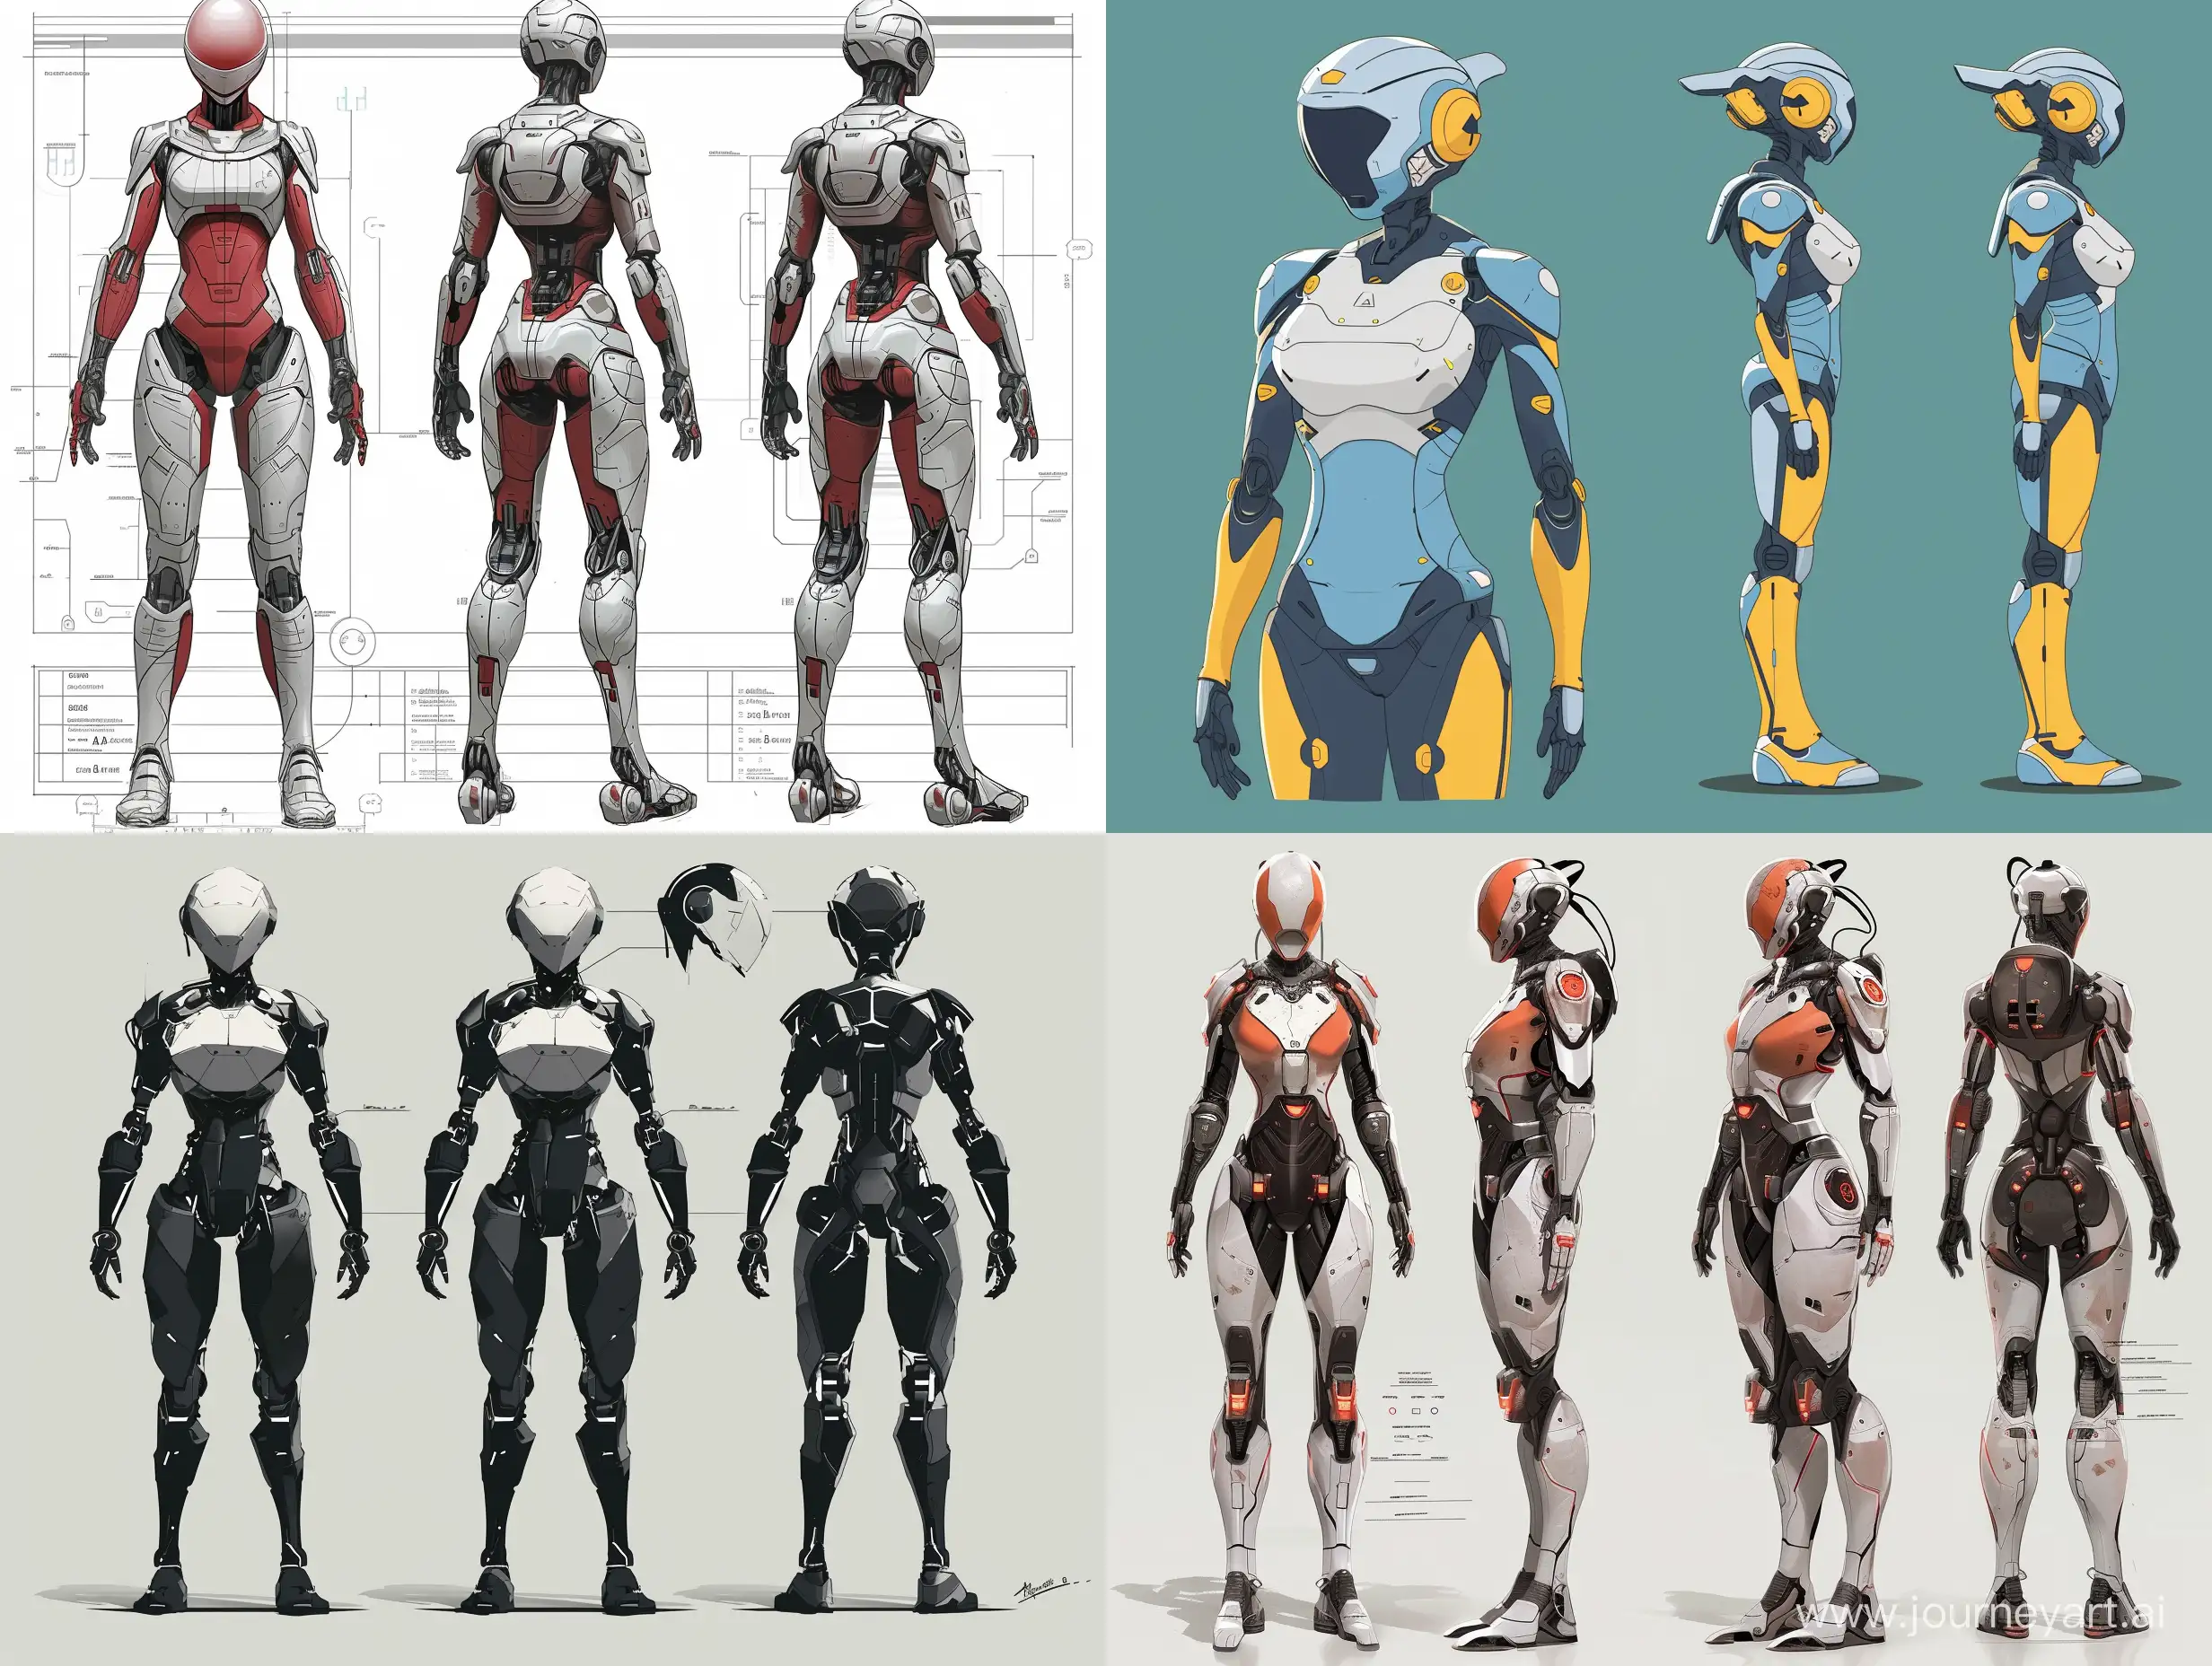 Futuristic-Female-Robot-Character-Sheet-2D-Illustration